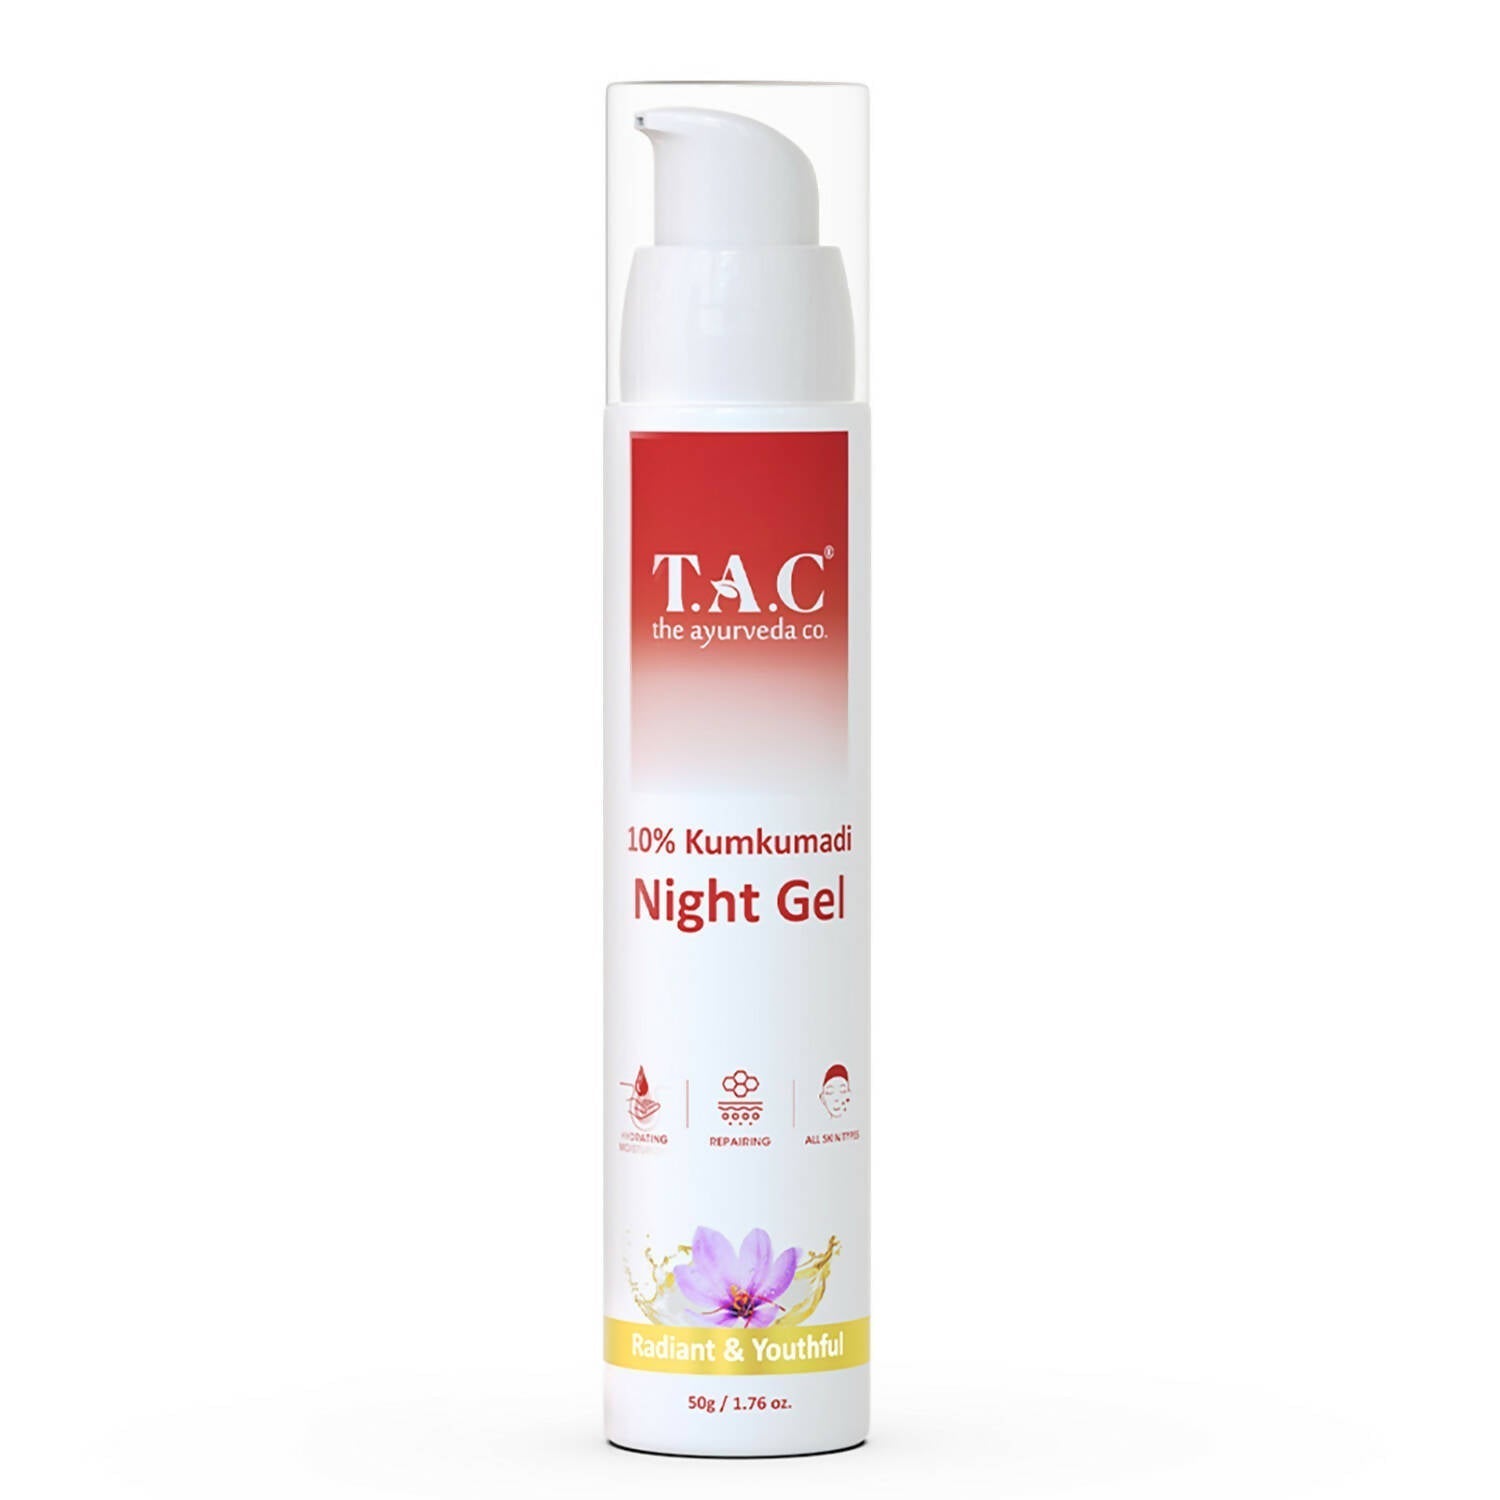 TAC - The Ayurveda Co. 10% Kumkumadi Night Gel for Glowing Skin - usa canada australia